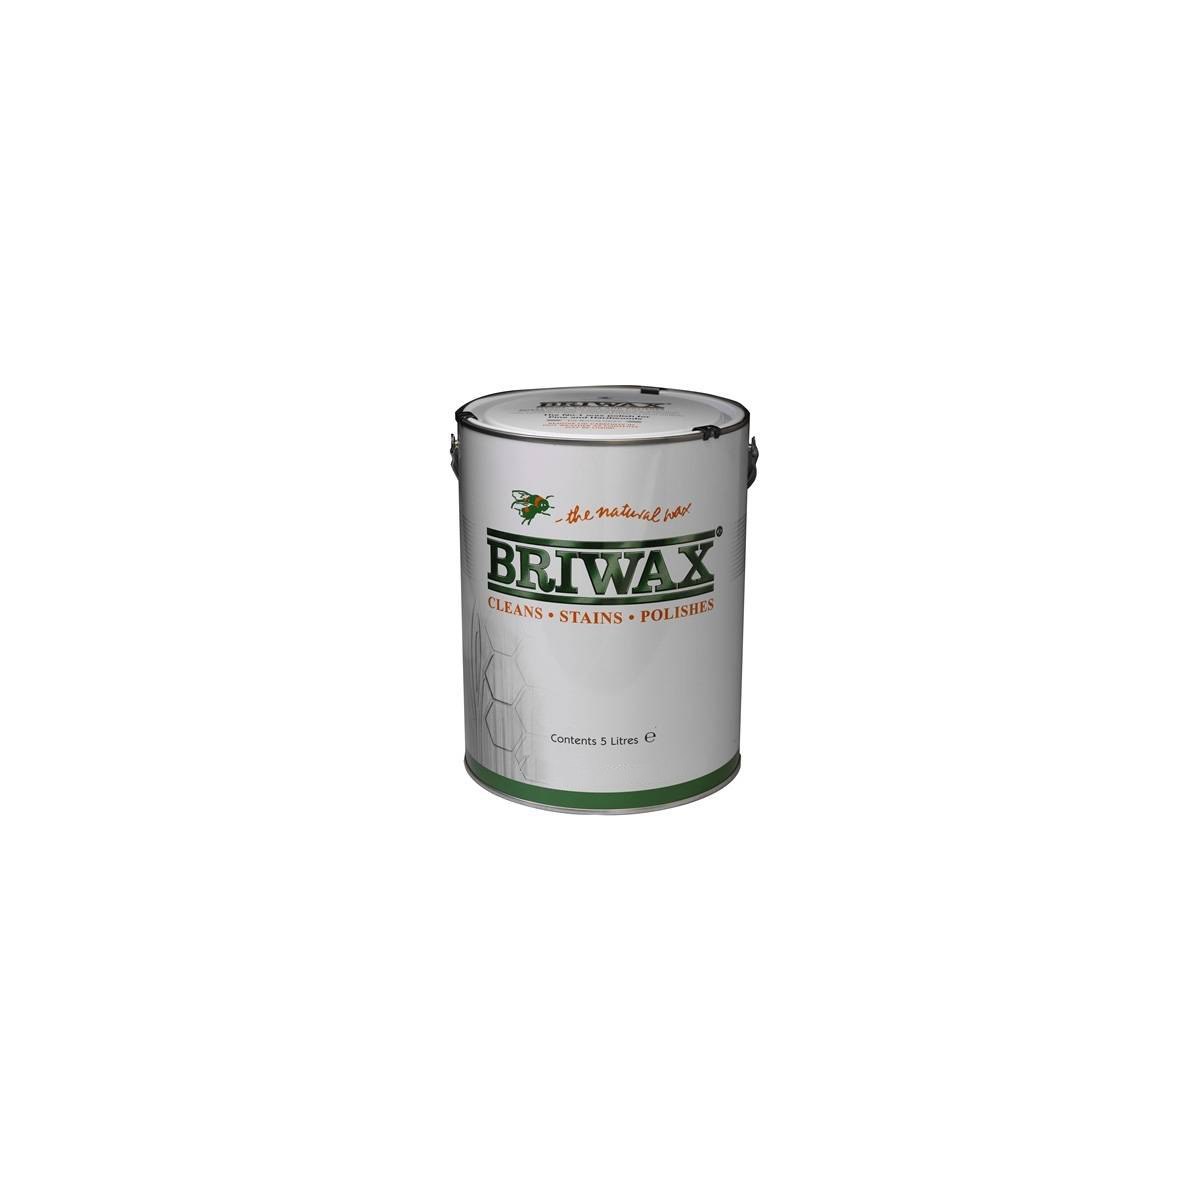 Briwax Original Wax Polish Rustic Pine 5 Litre